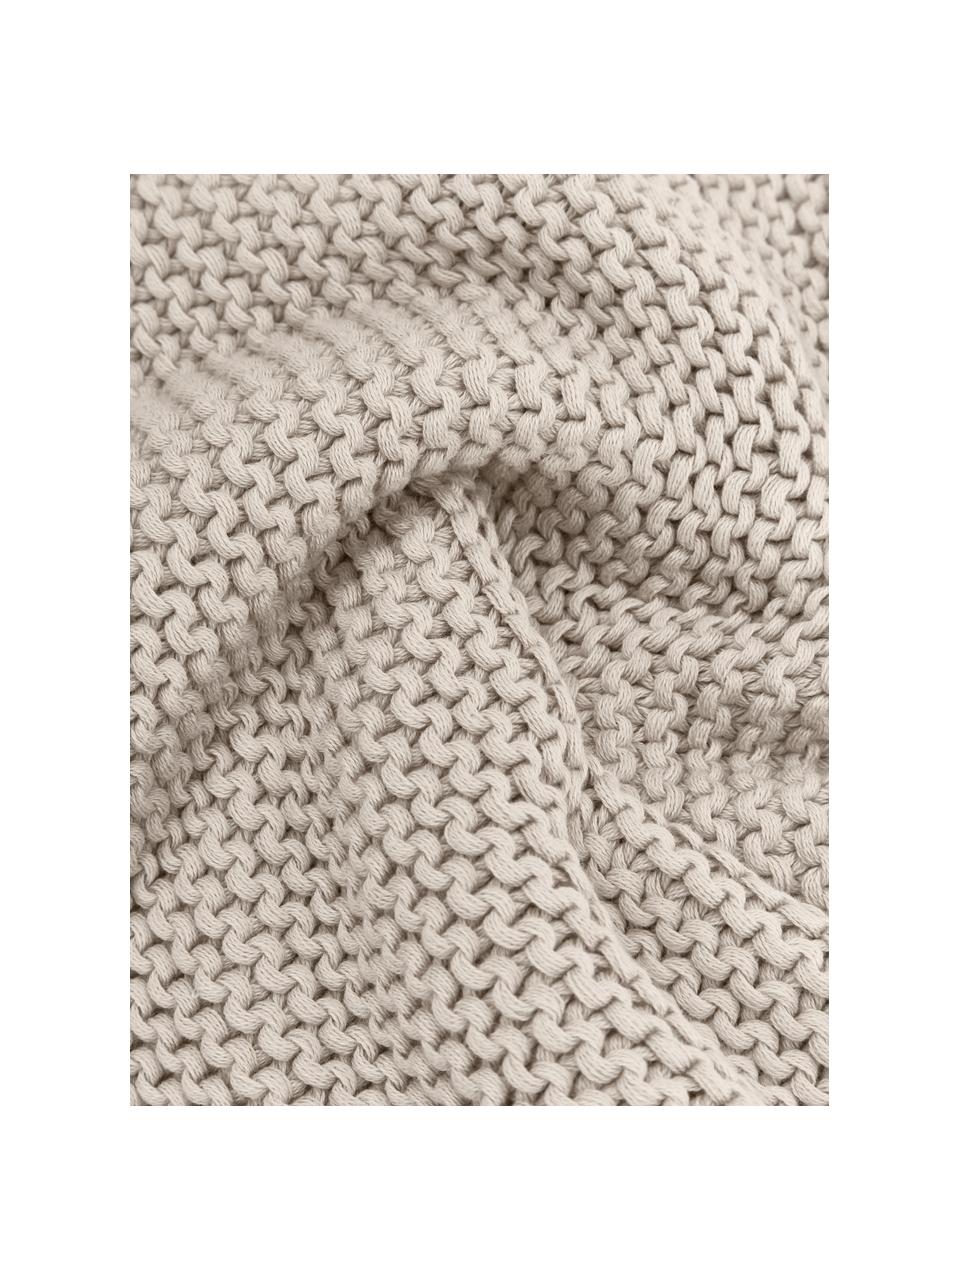 Coperta a maglia in cotone organico beige Adalyn, 100% cotone organico, certificato GOTS, Beige, Larg. 150 x Lung. 200 cm